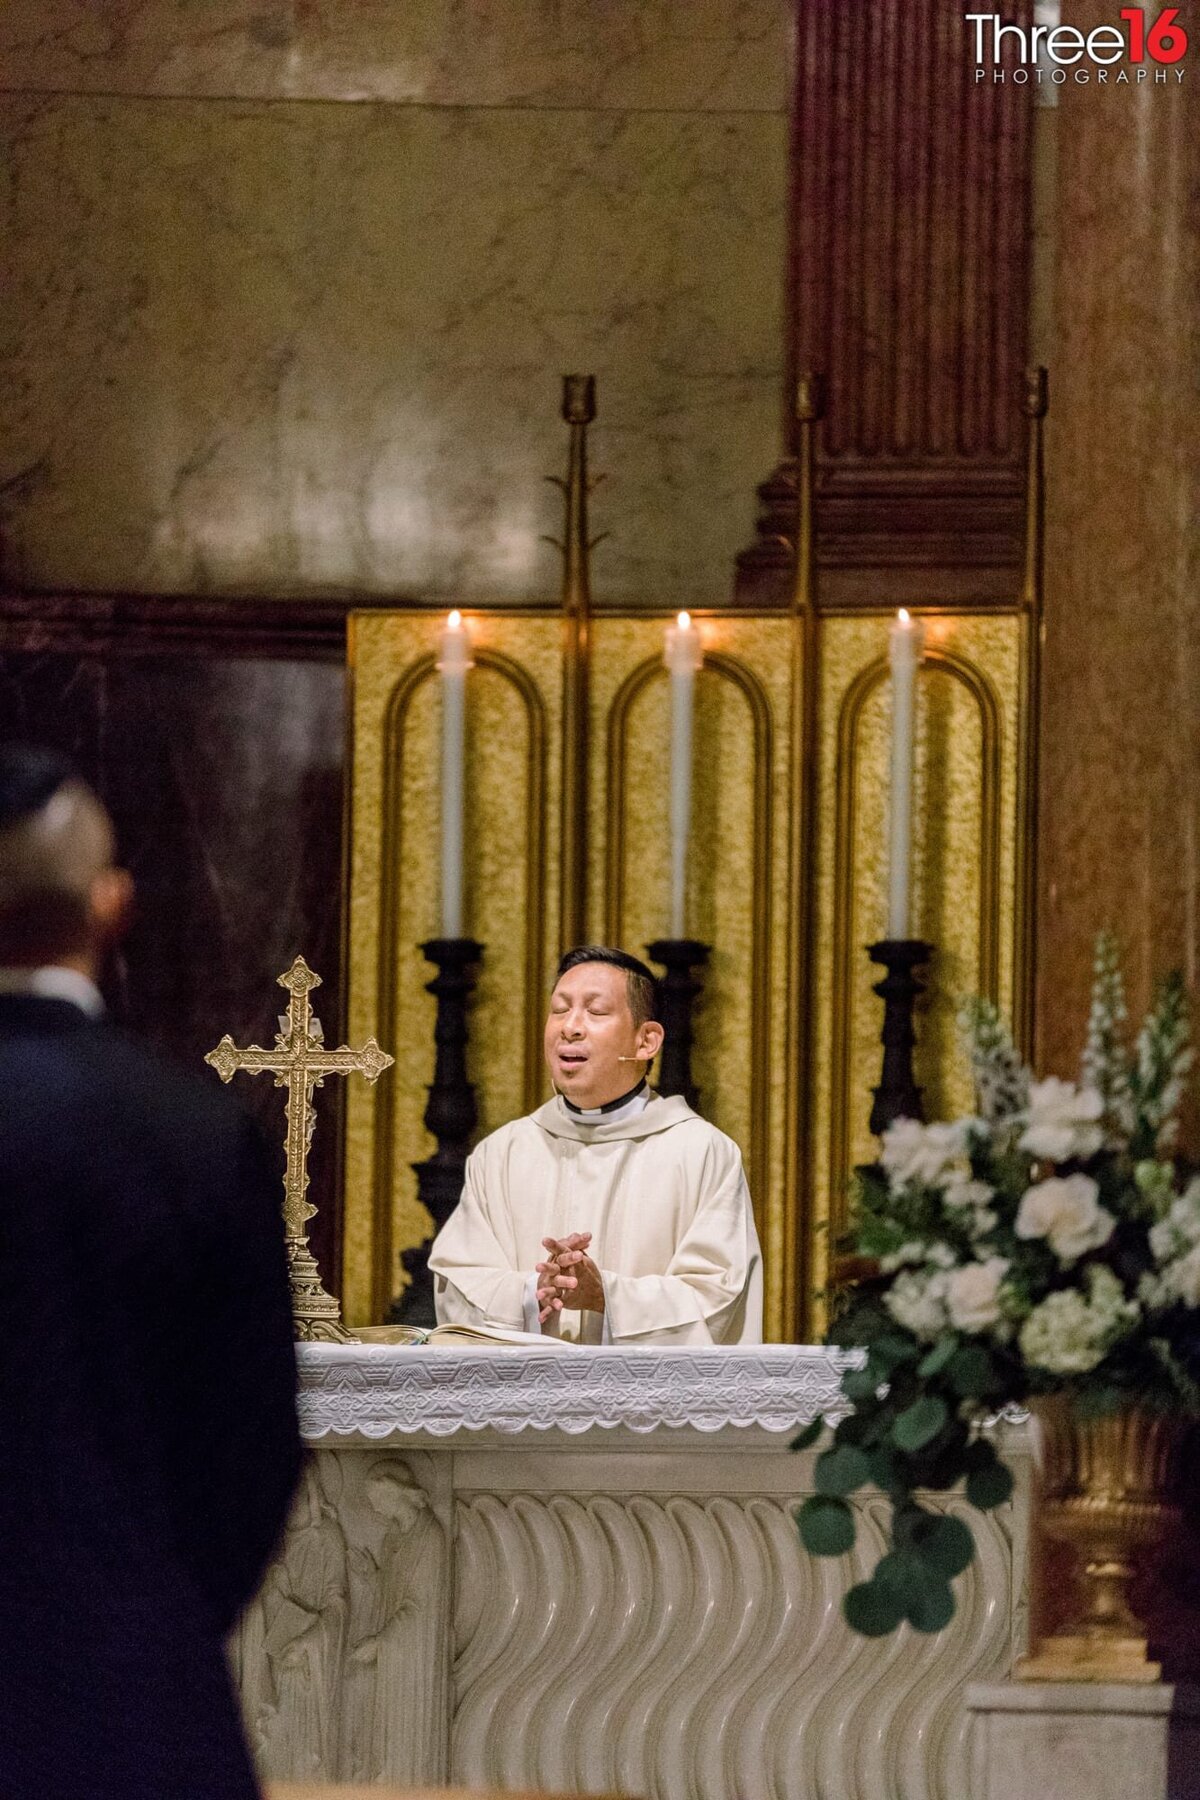 Priest speaks during a Catholic wedding ceremony